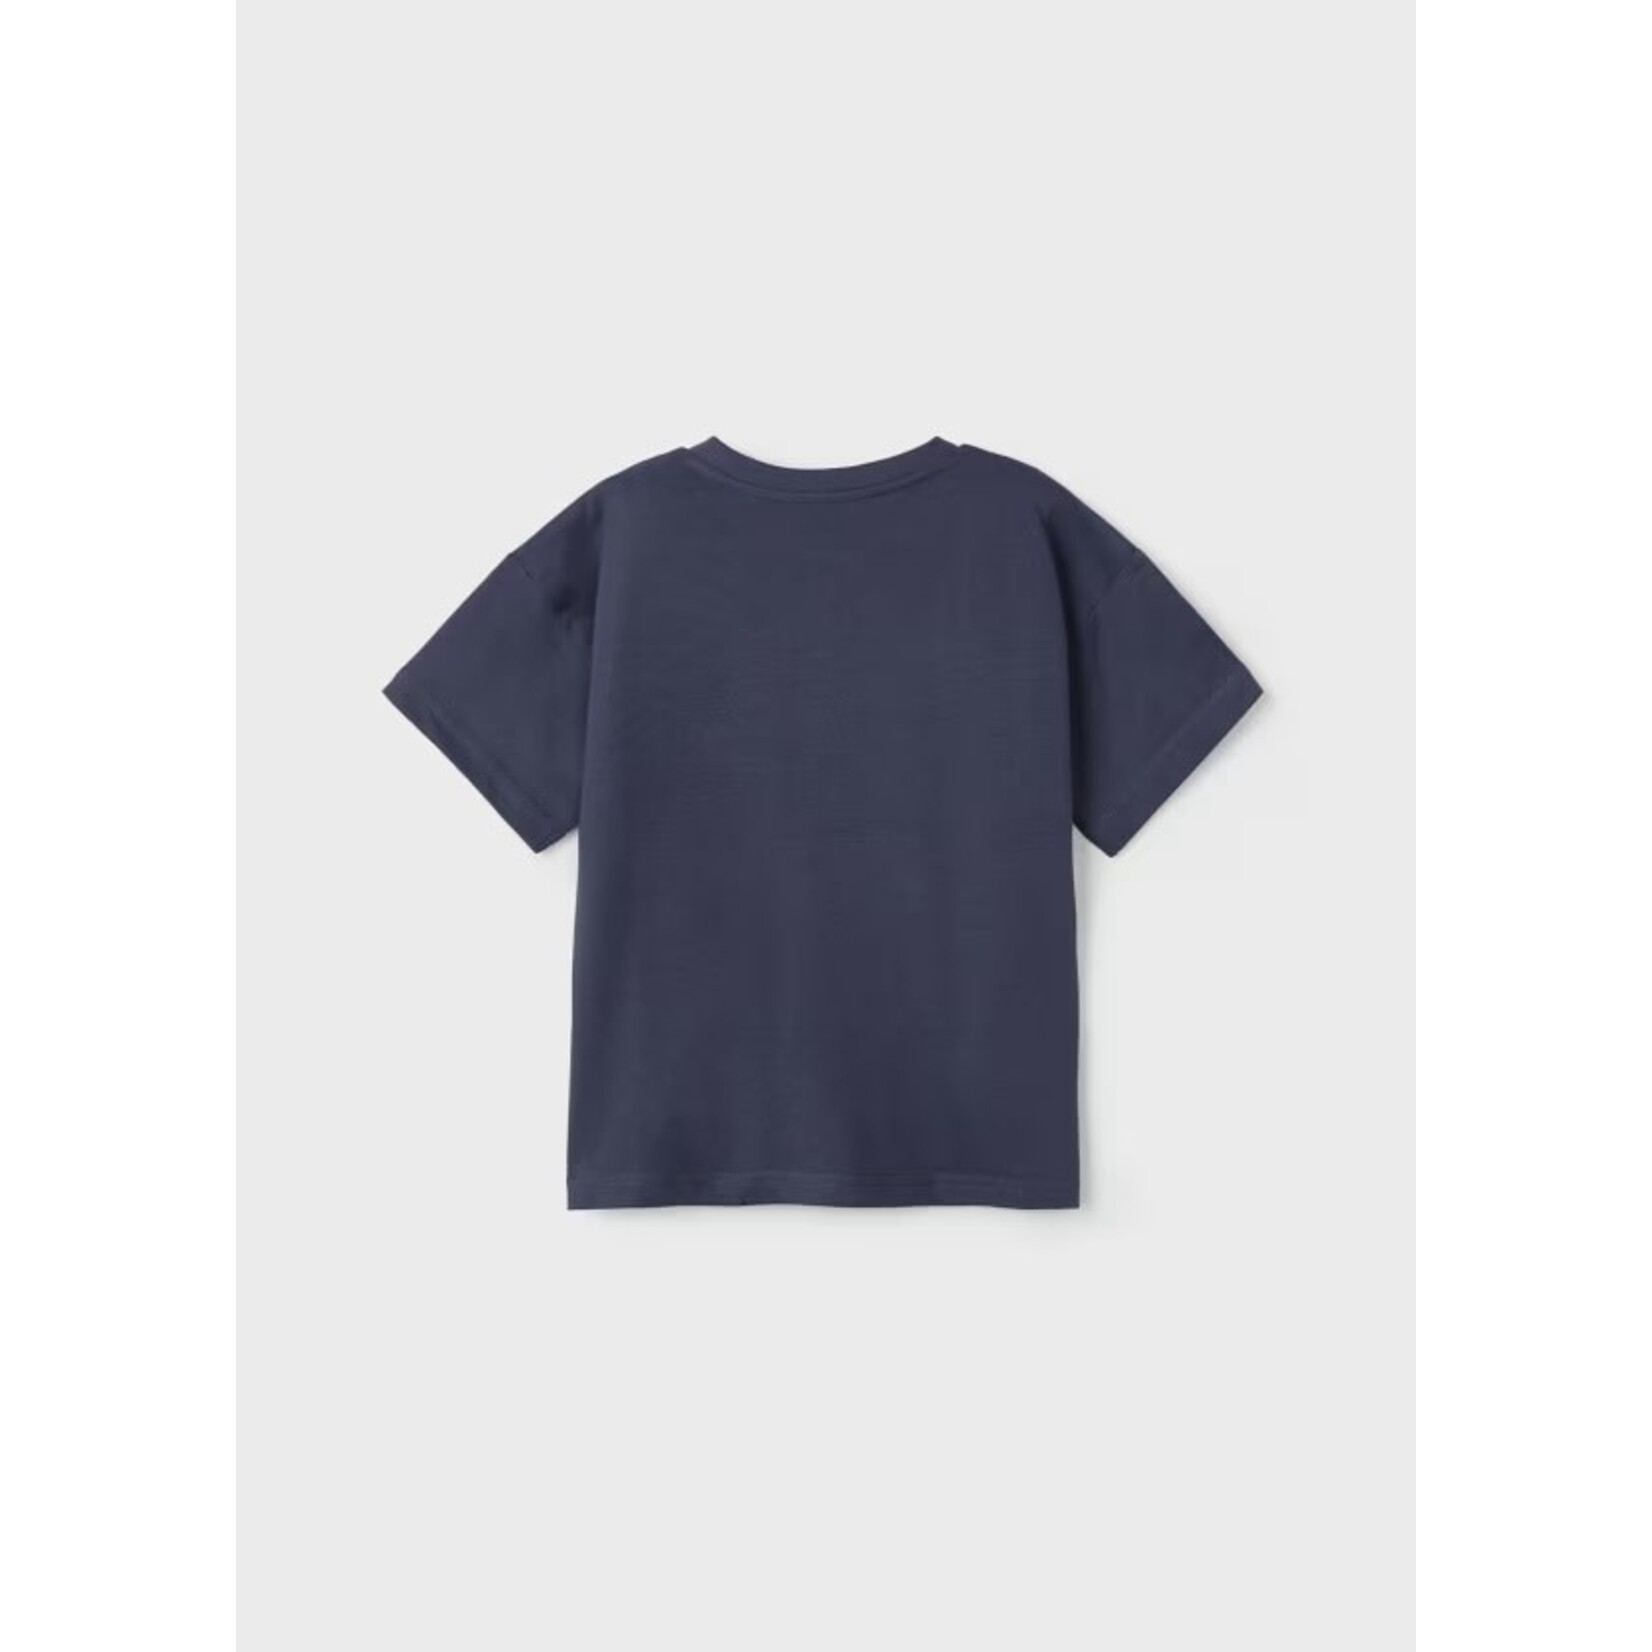 Mayoral MAYORAL - Dark gray blue short sleeve t-shirt with skate park print